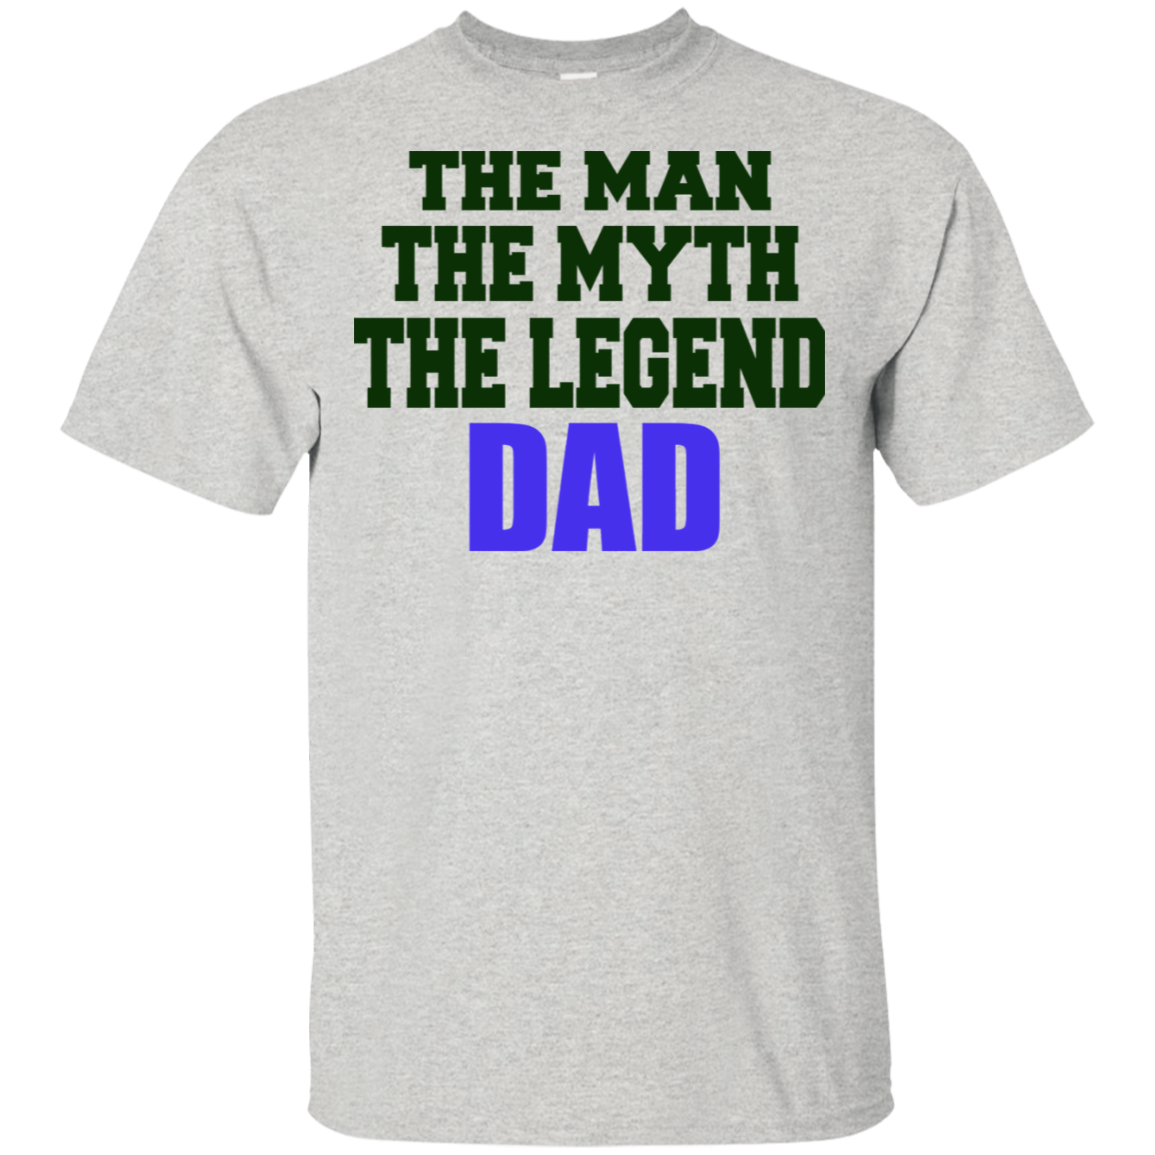 The Man, The Myth, The Legend